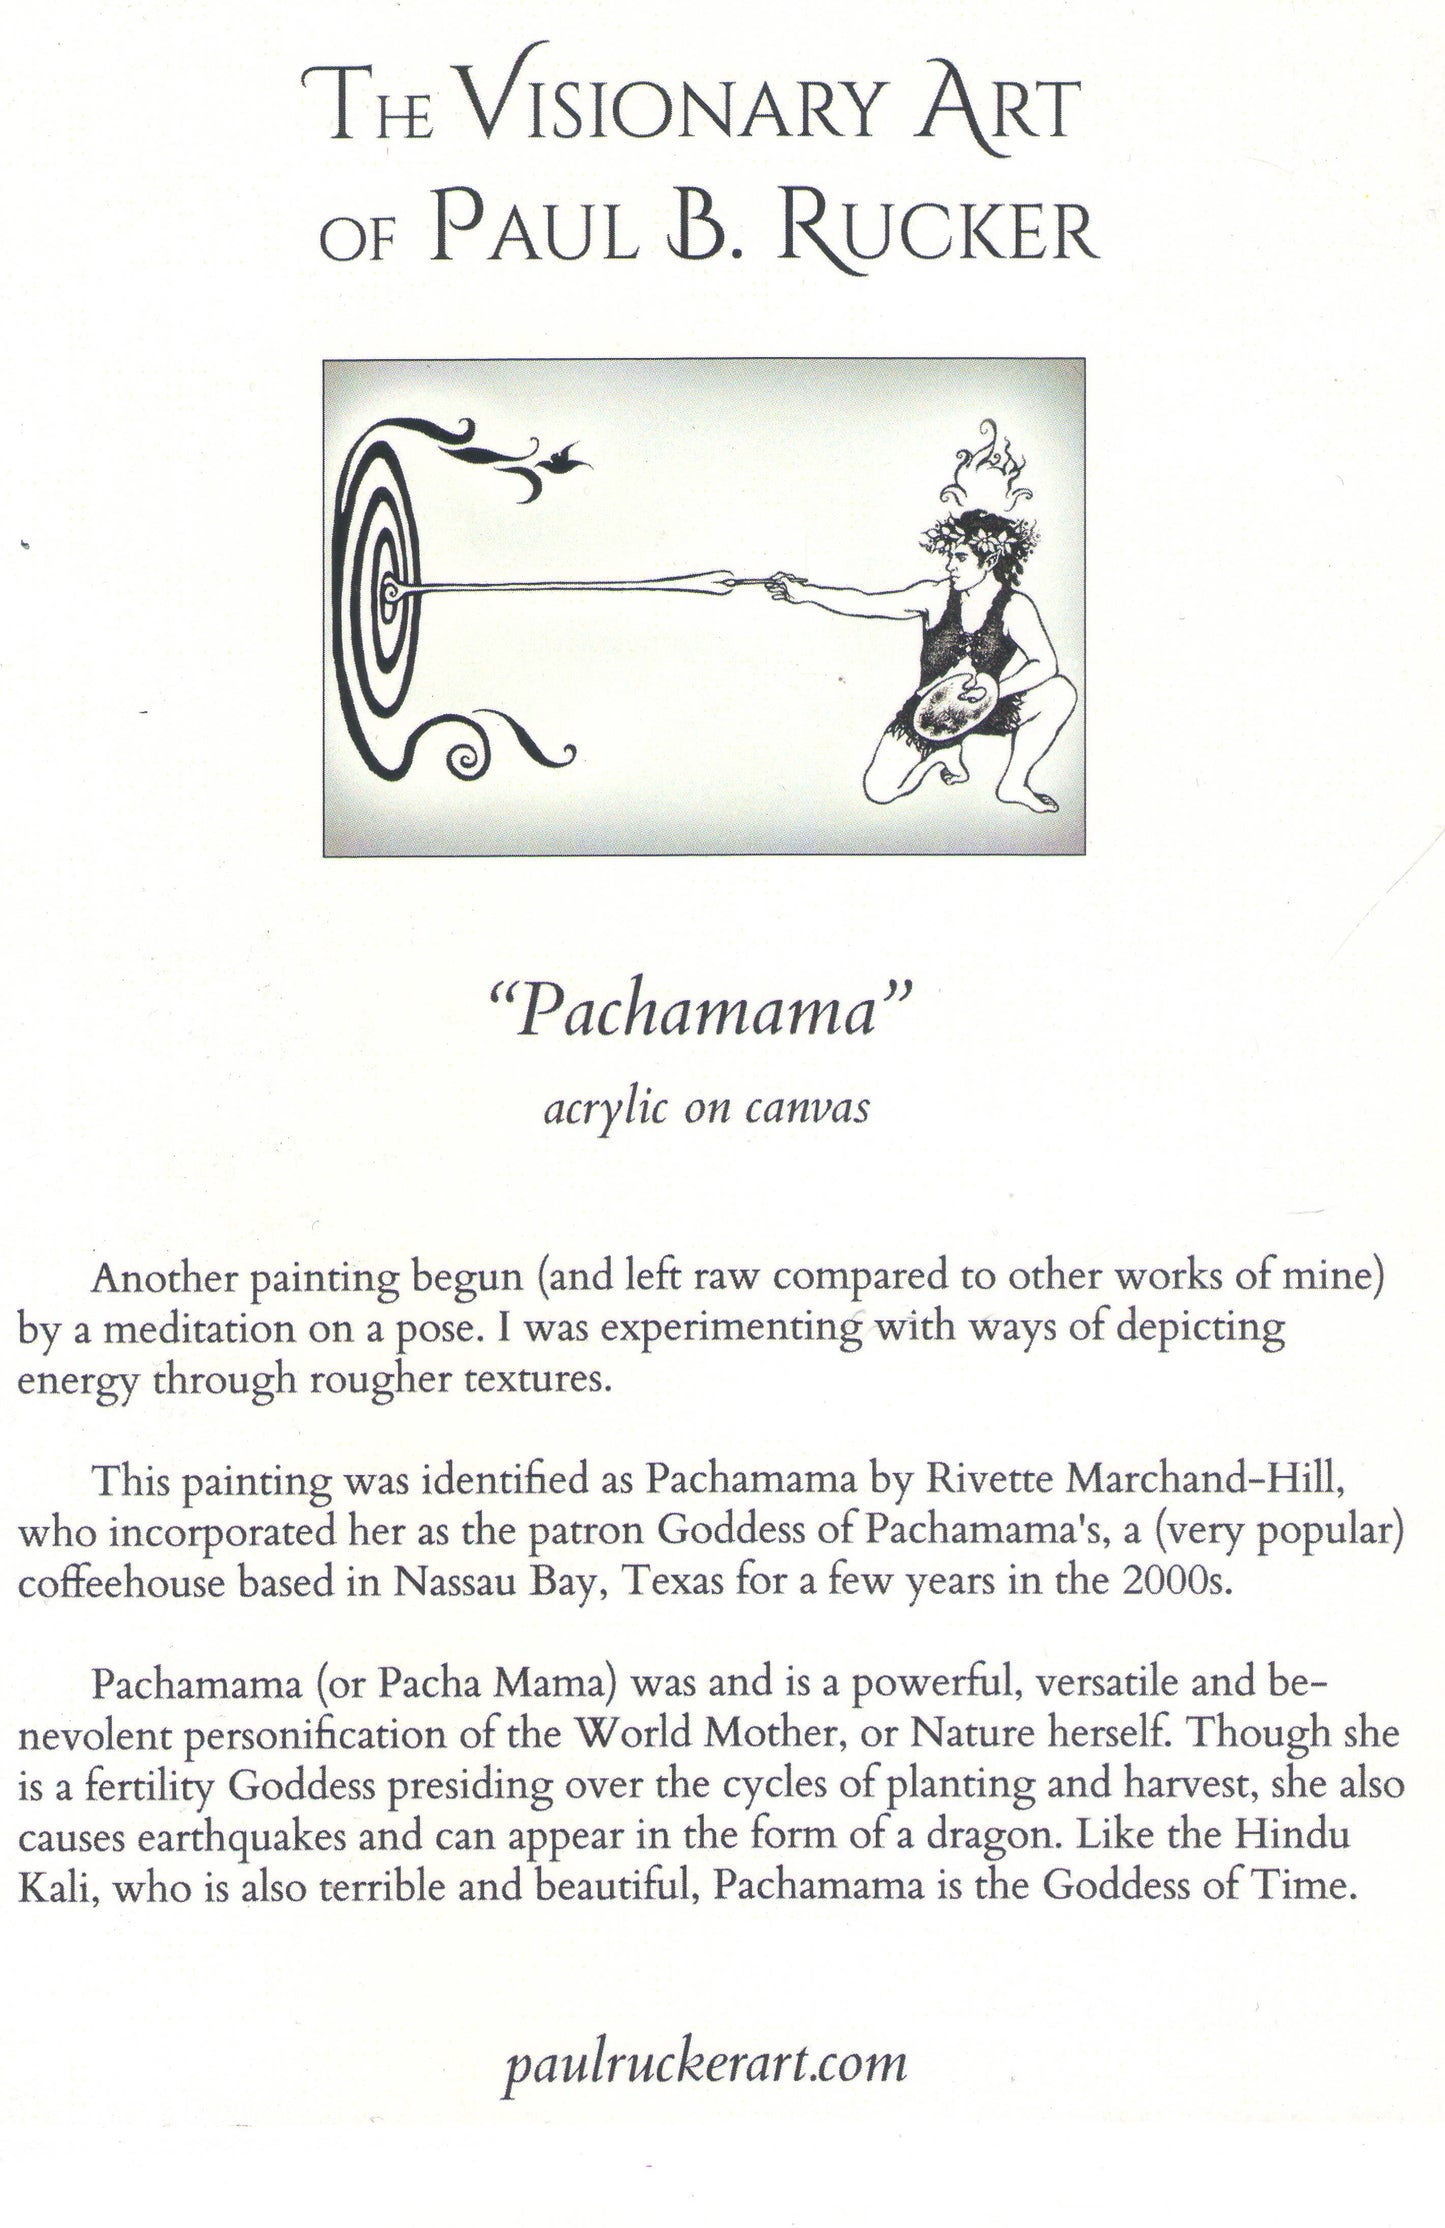 "Pachamama" greeting card by Paul B. Rucker